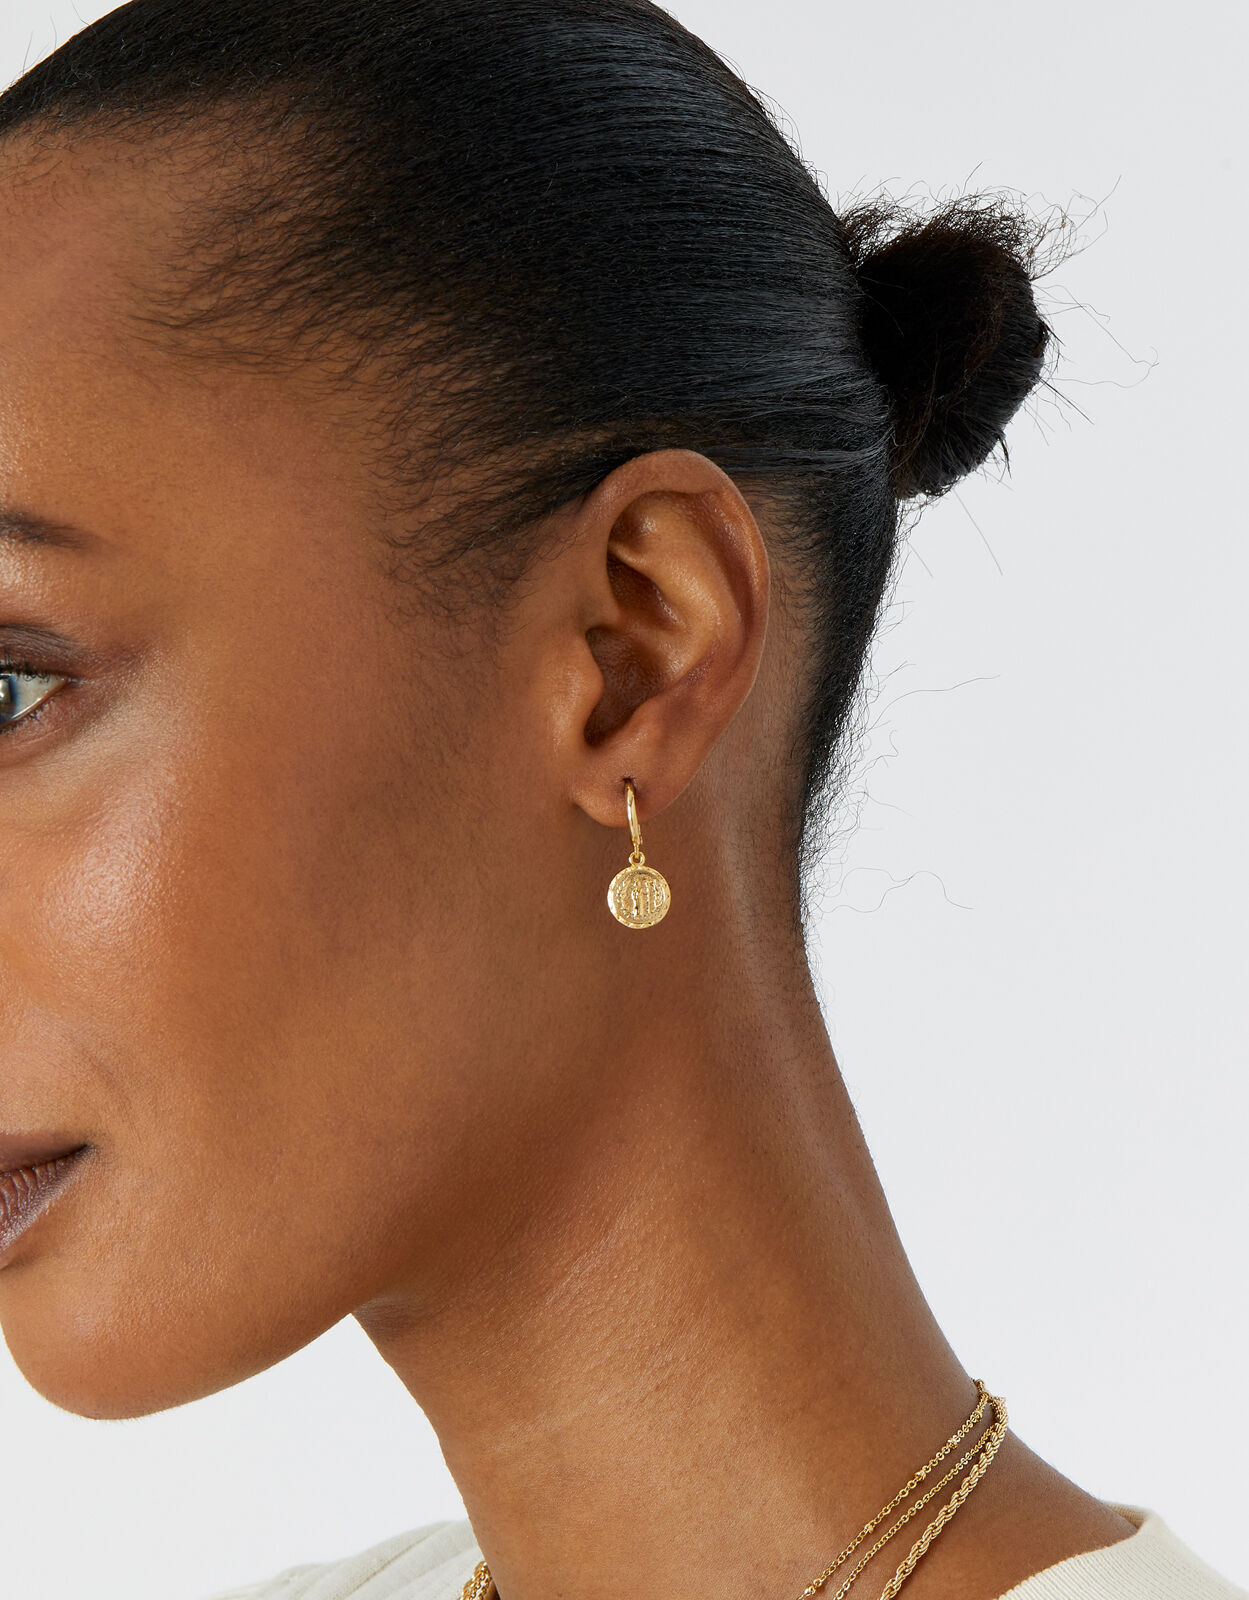 Buy Everyday Gold Hoop Earrings  Gold Filled Earrings  Gold Online in  India  Etsy